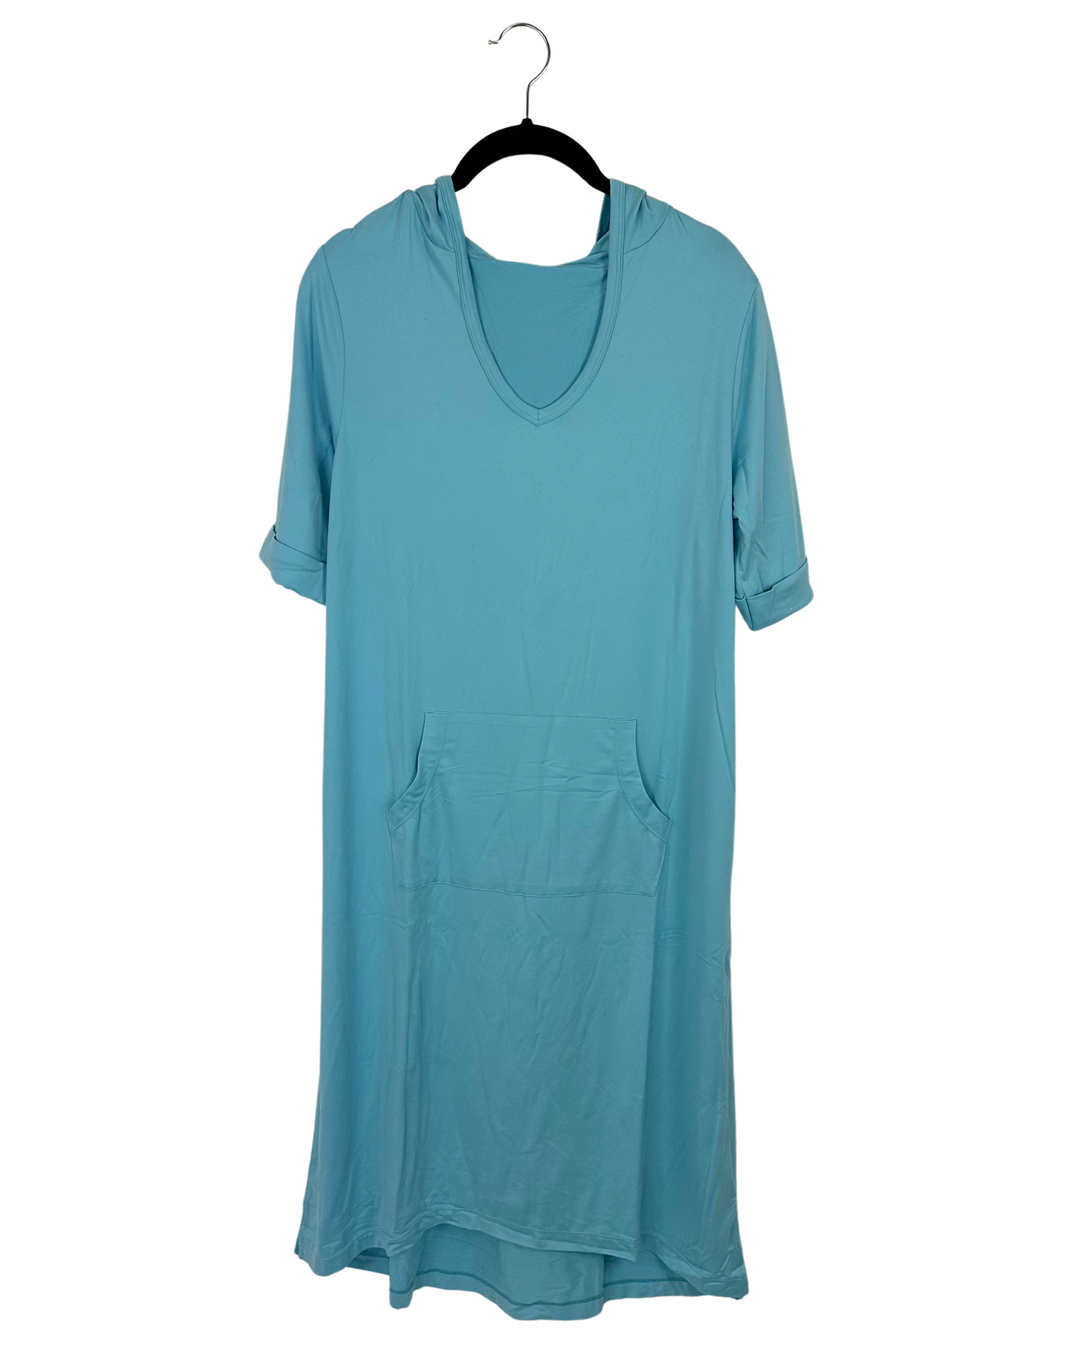 Light Blue Lounge Dress - Size 6/8